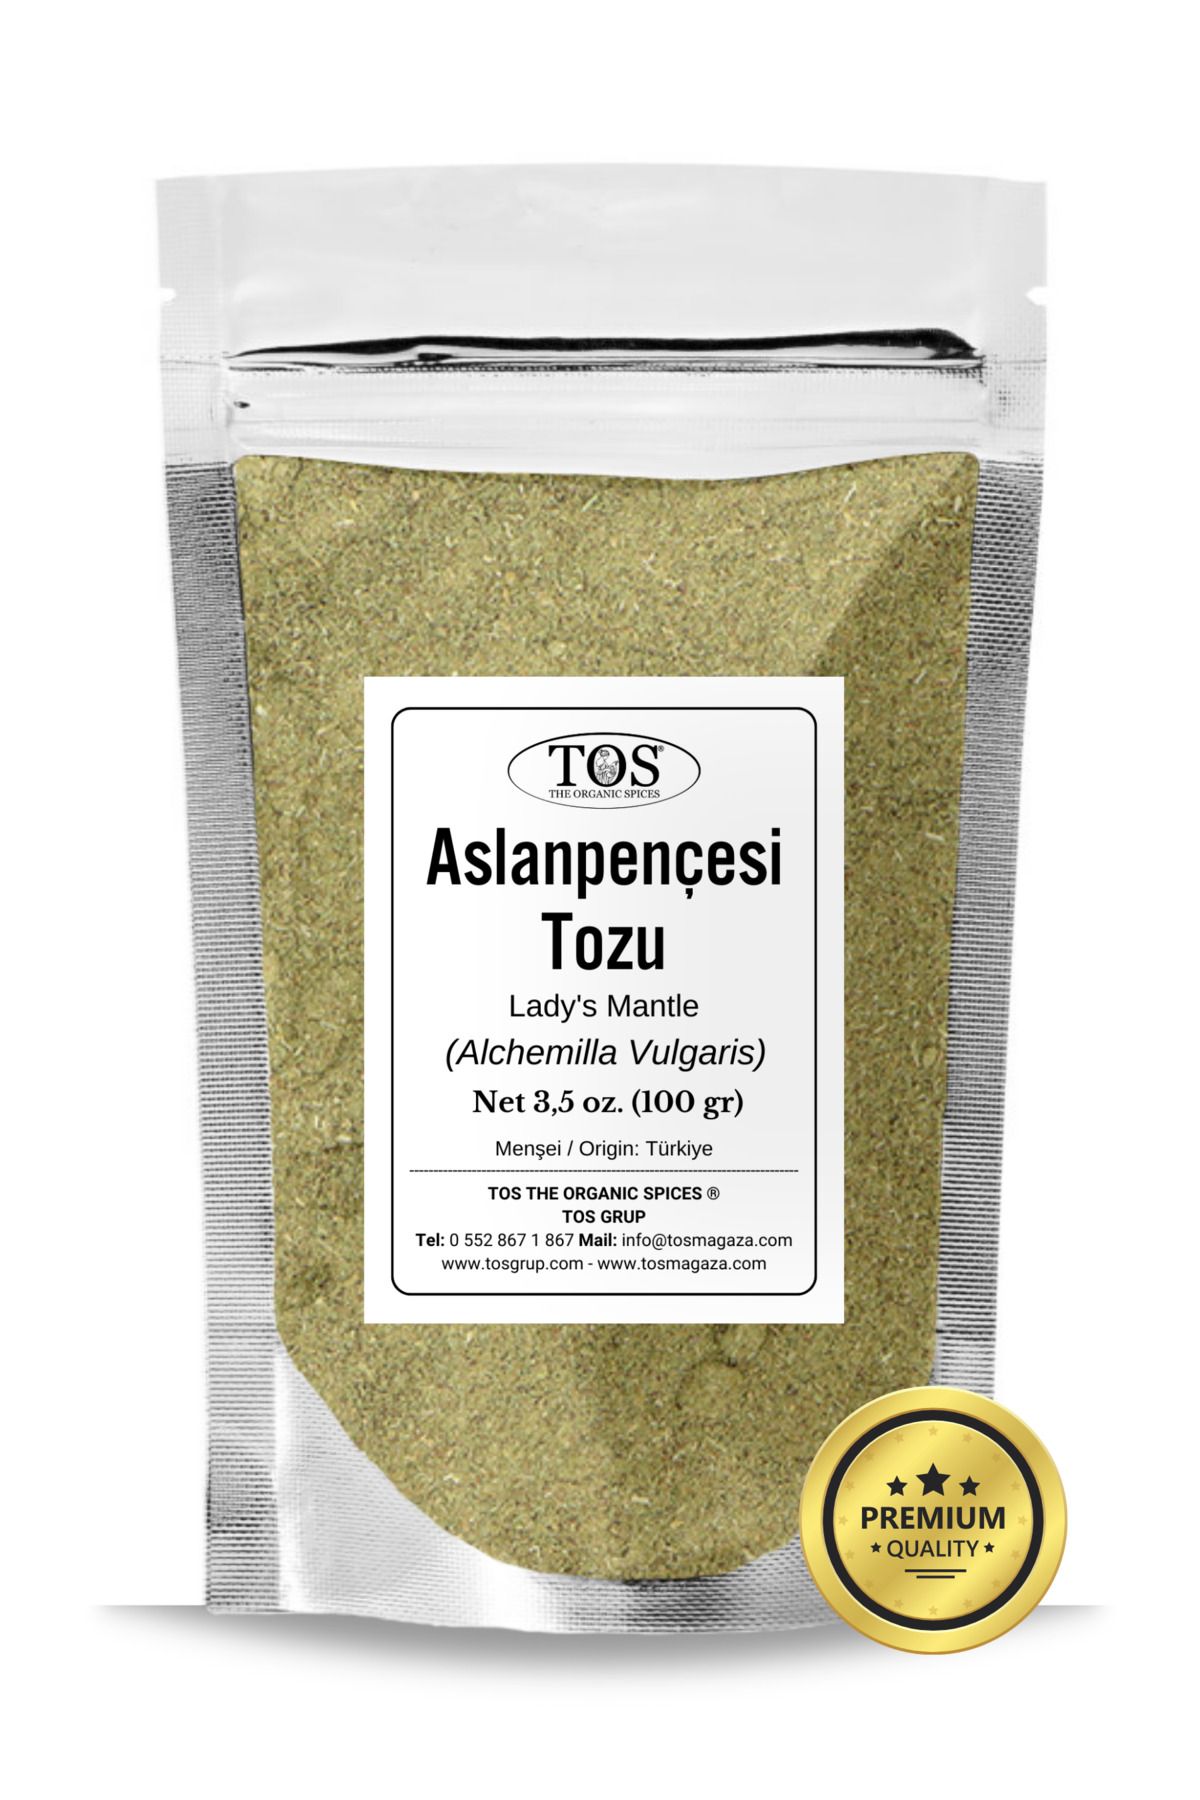 TOS The Organic Spices Aslanpençesi Tozu 100 gr (1. Kalite) Alchemilla Vulgaris